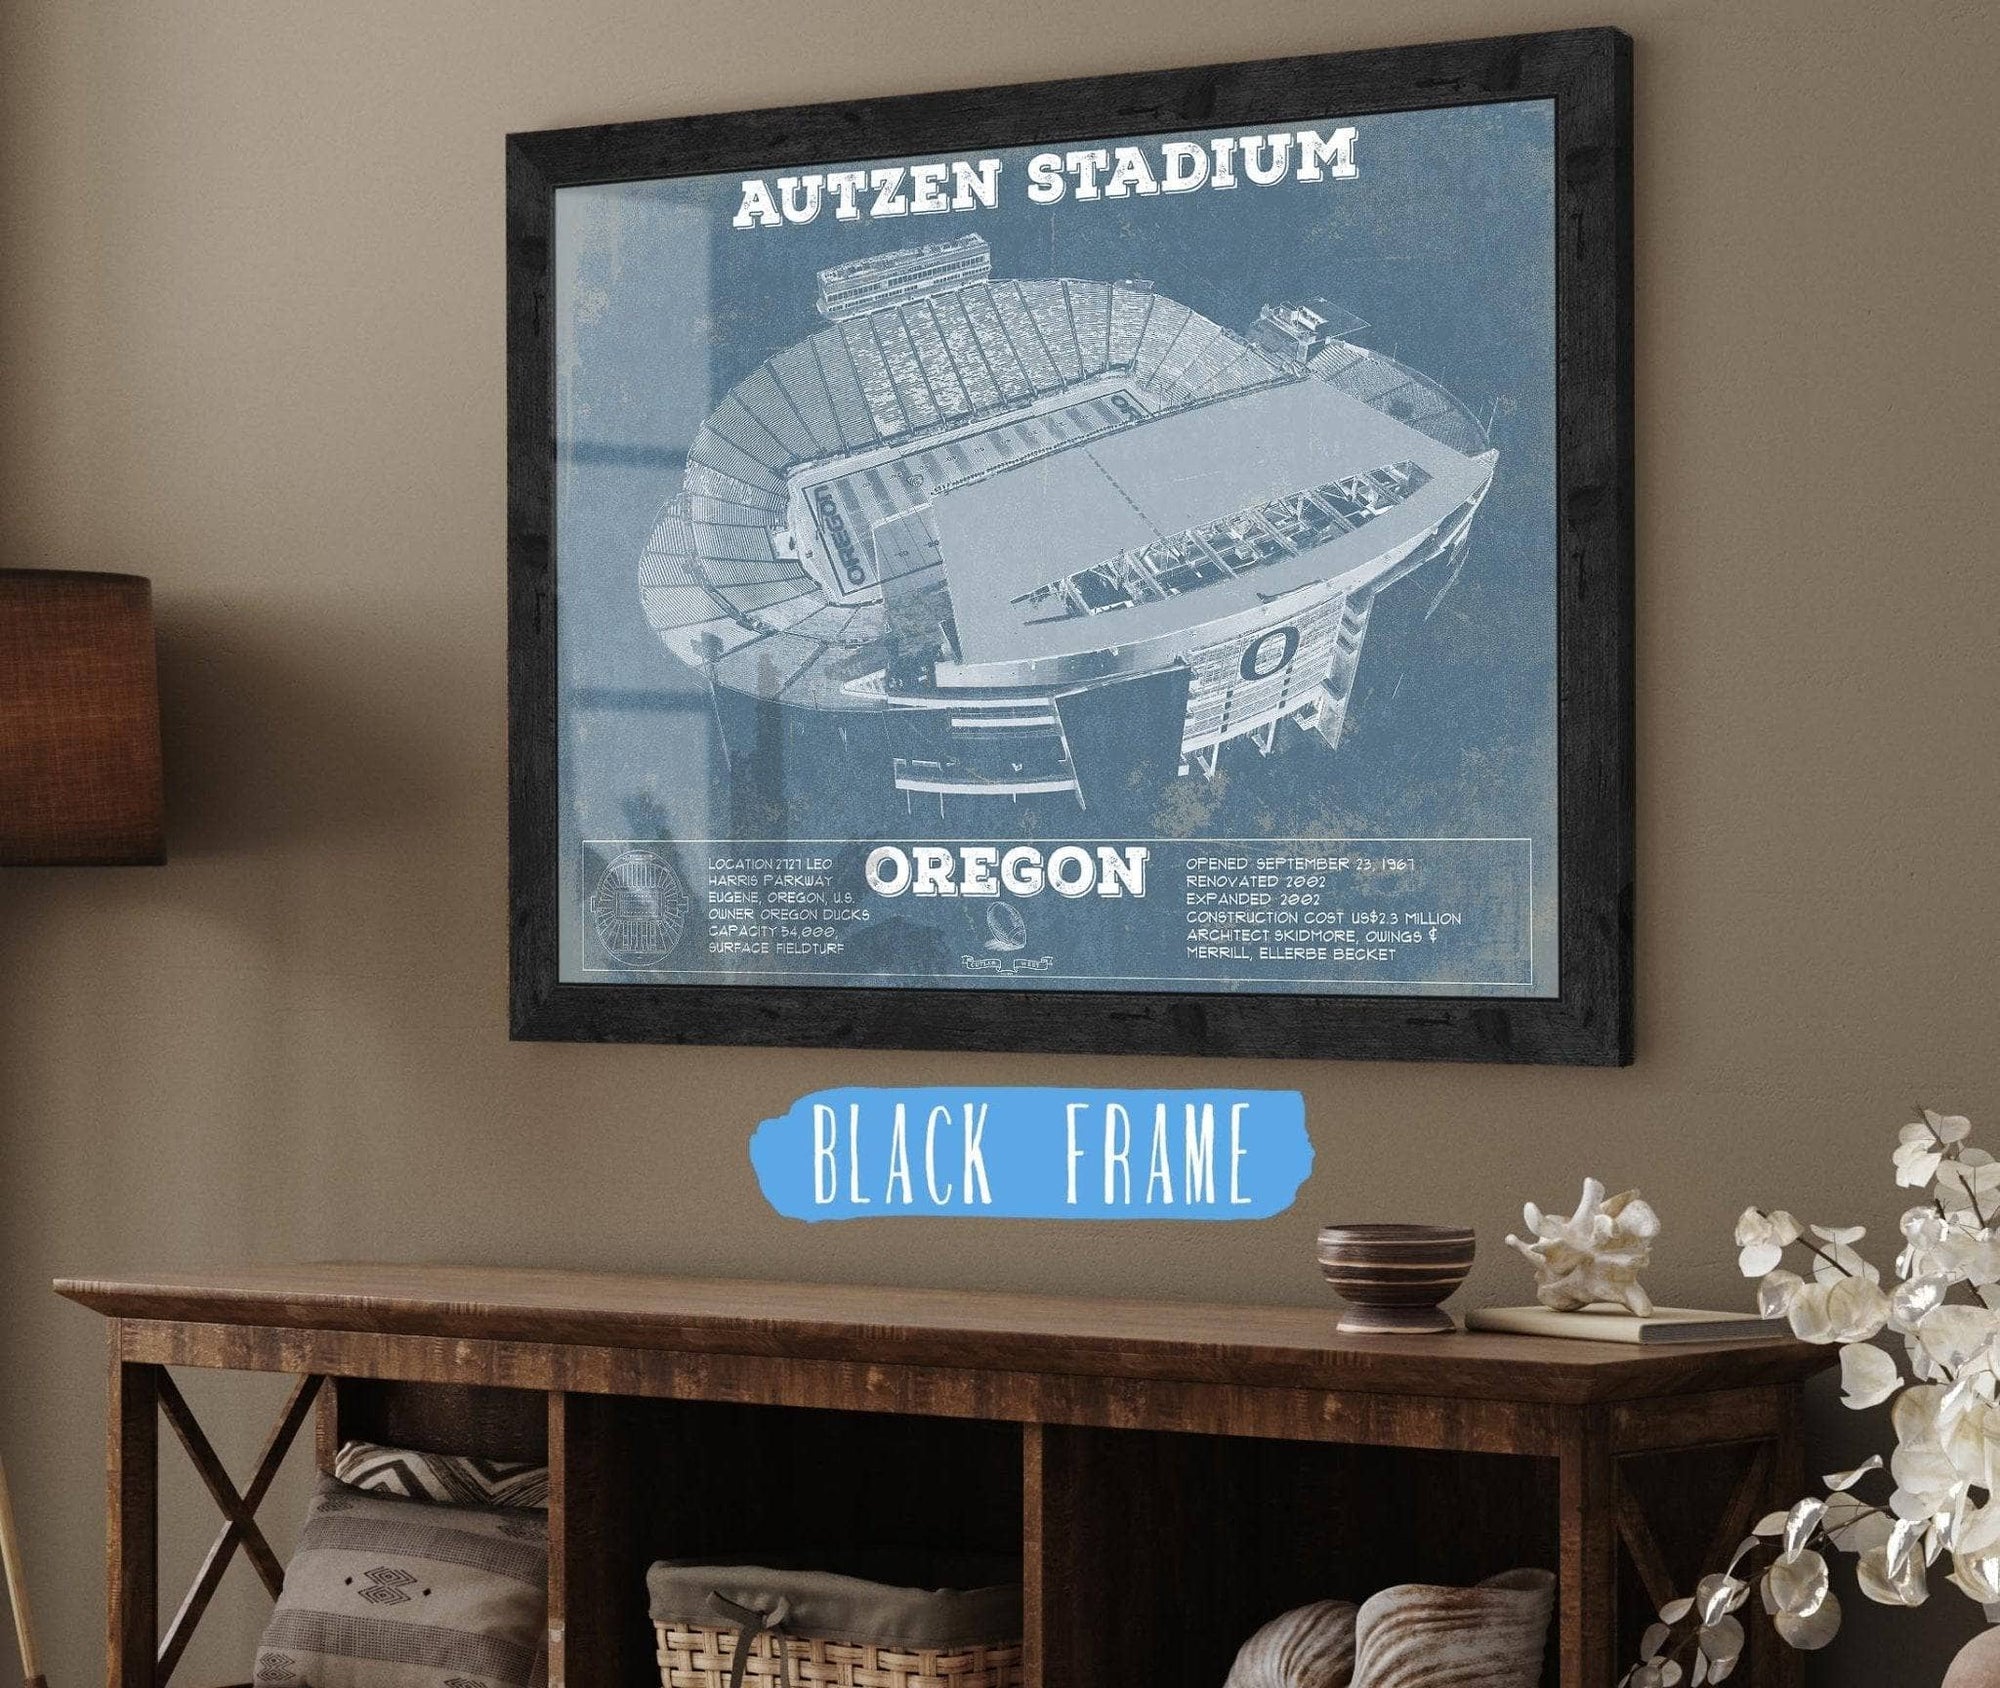 Cutler West College Football Collection 14" x 11" / Black Frame Vintage Autzen Stadium - Oregon Ducks Football Print 704763872-14"-x-11"35802